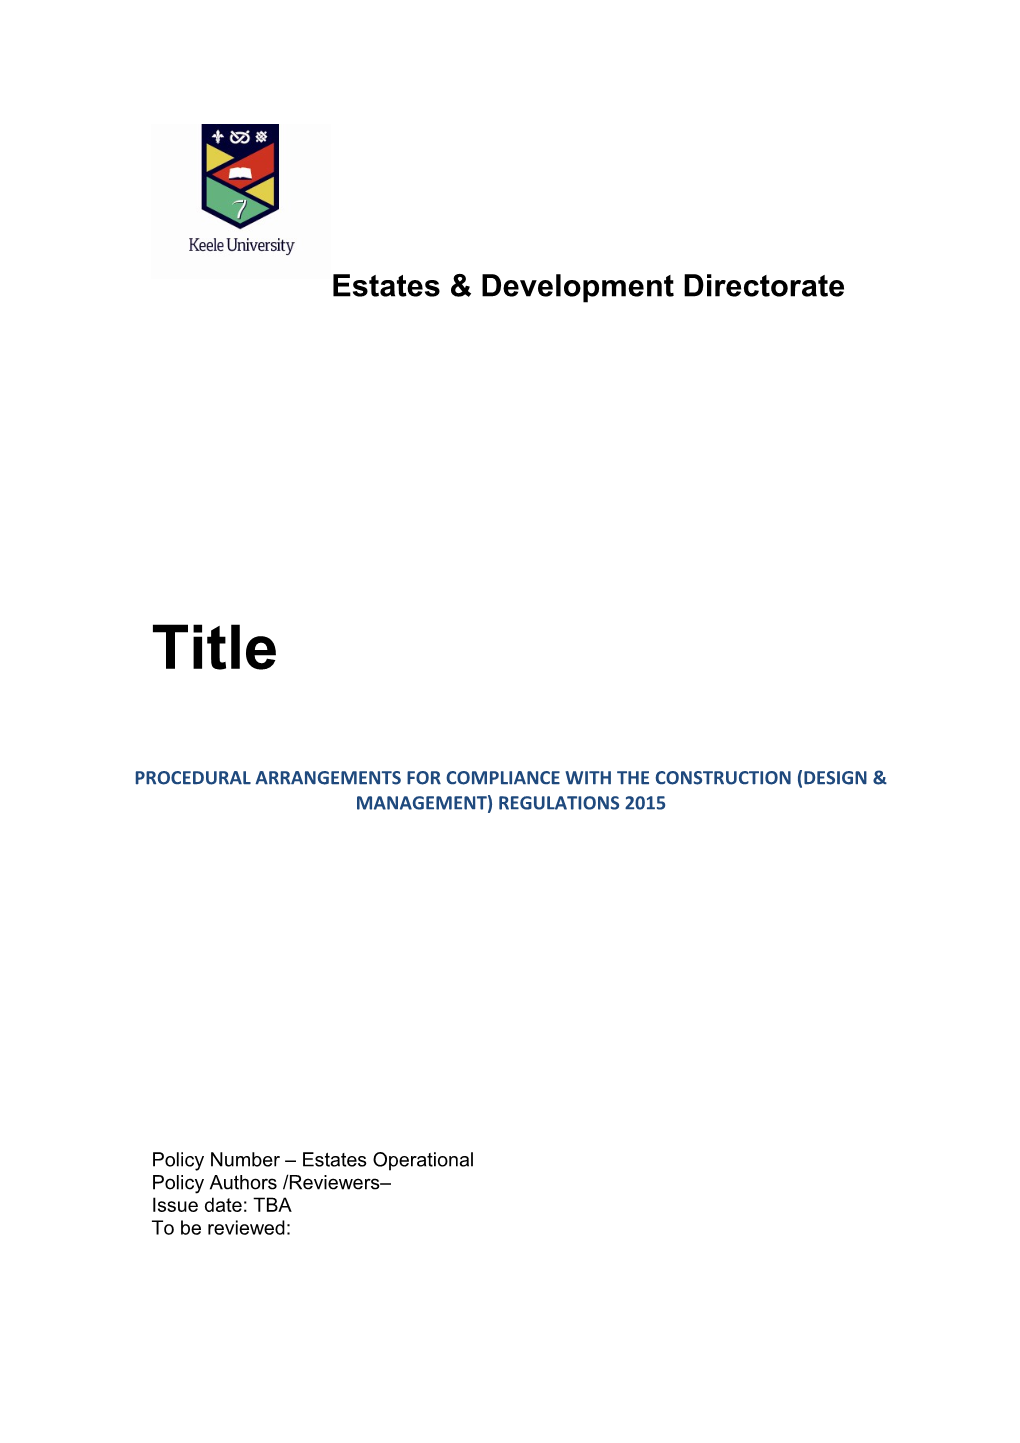 Procedural Arrangements for Compliance with the Construction (Design & Management) Regulations